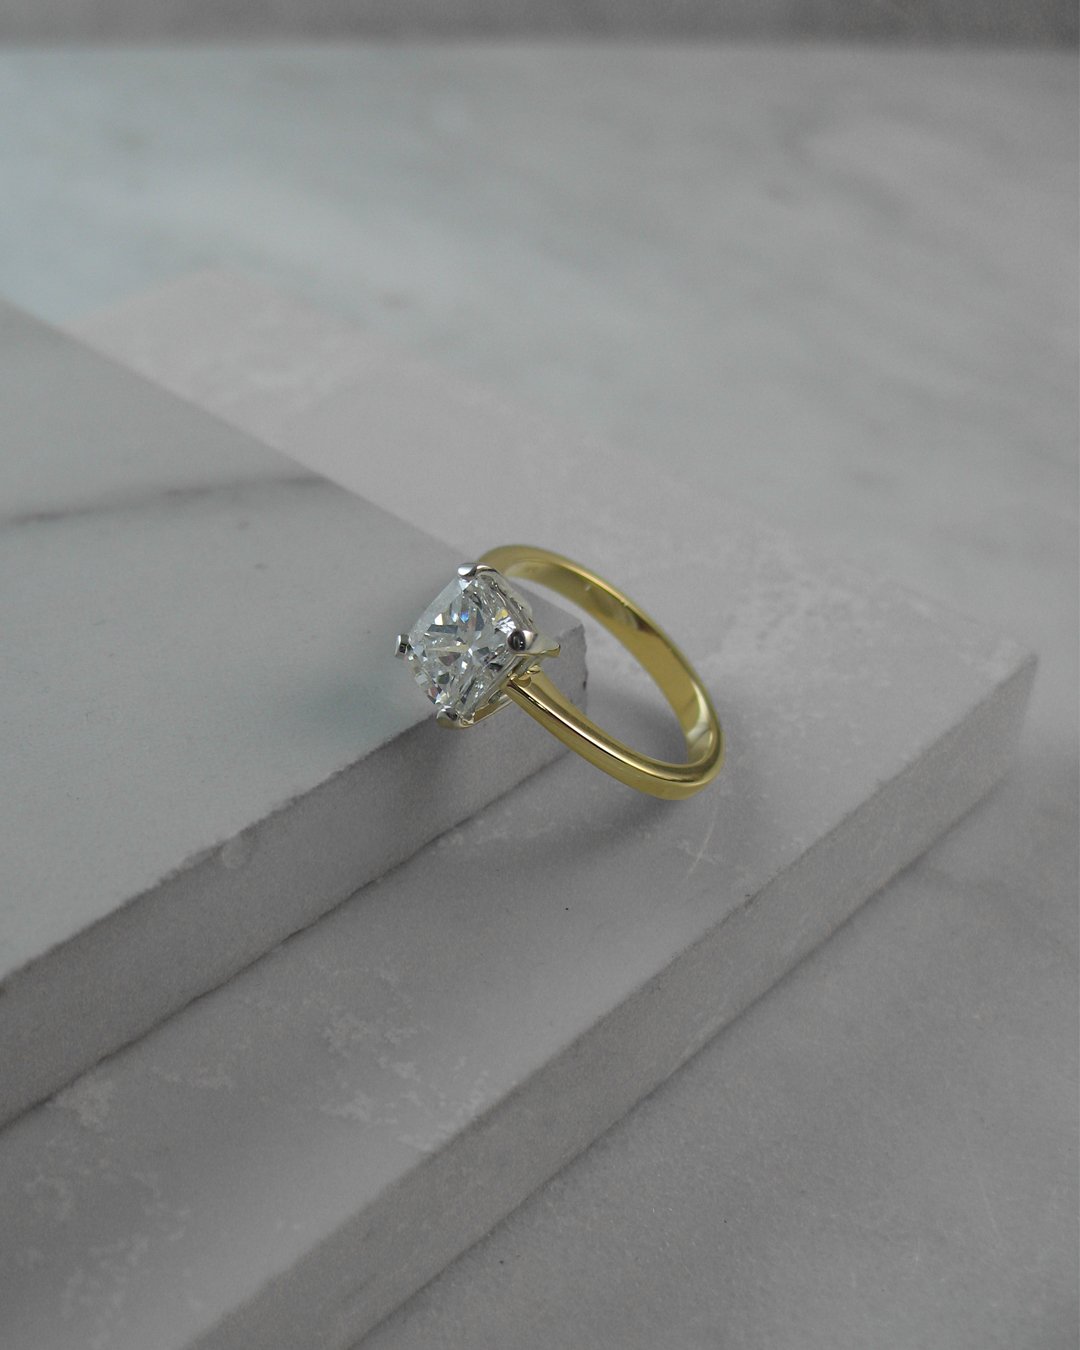 An alluring cushion cut diamond solitaire engagement ring